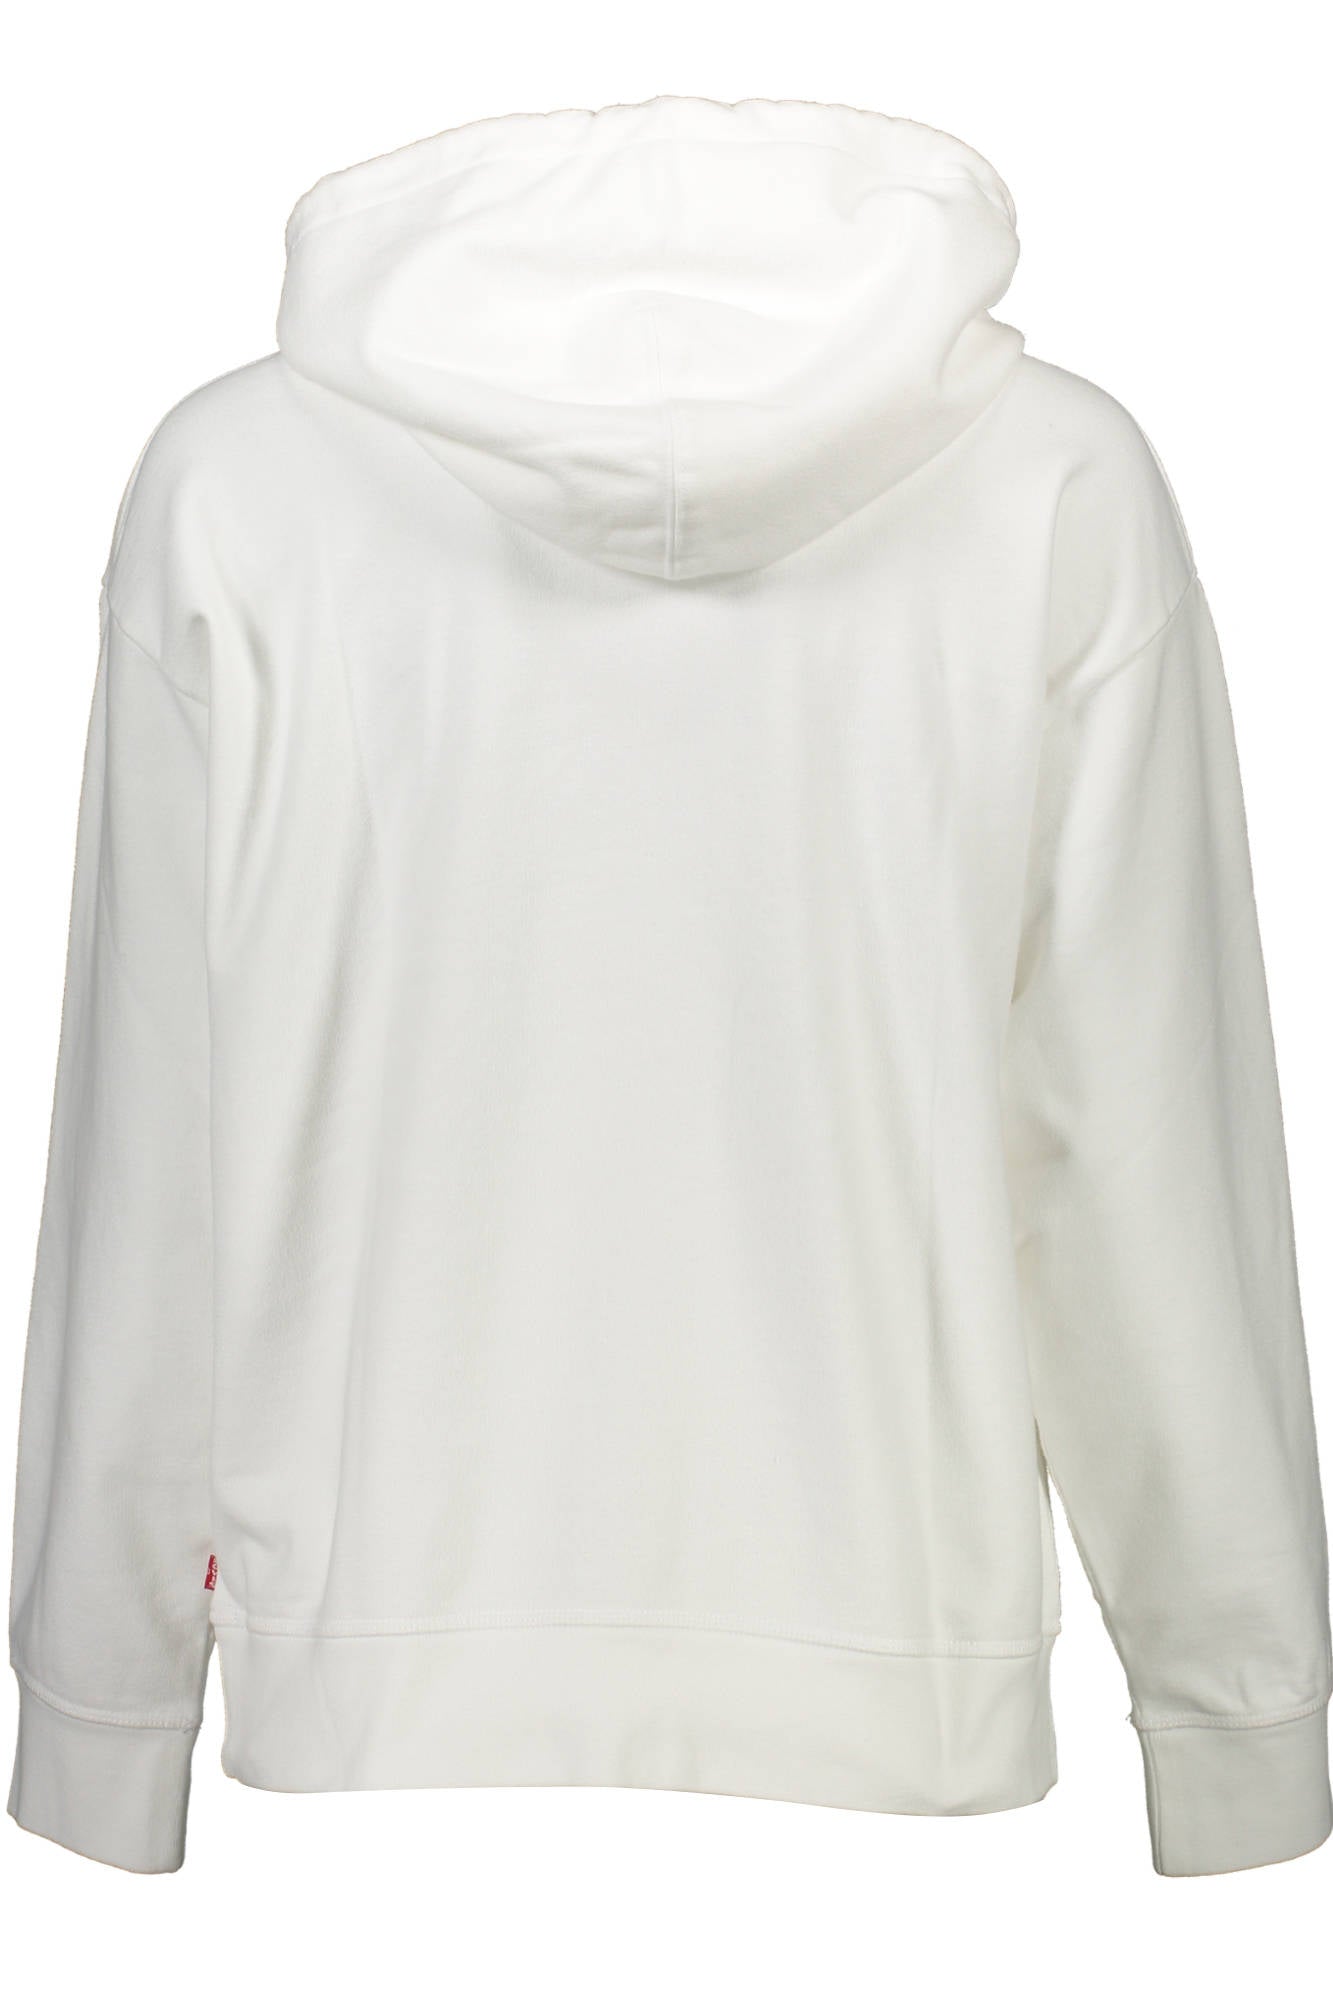 Levi's White Cotton Sweater - Fizigo